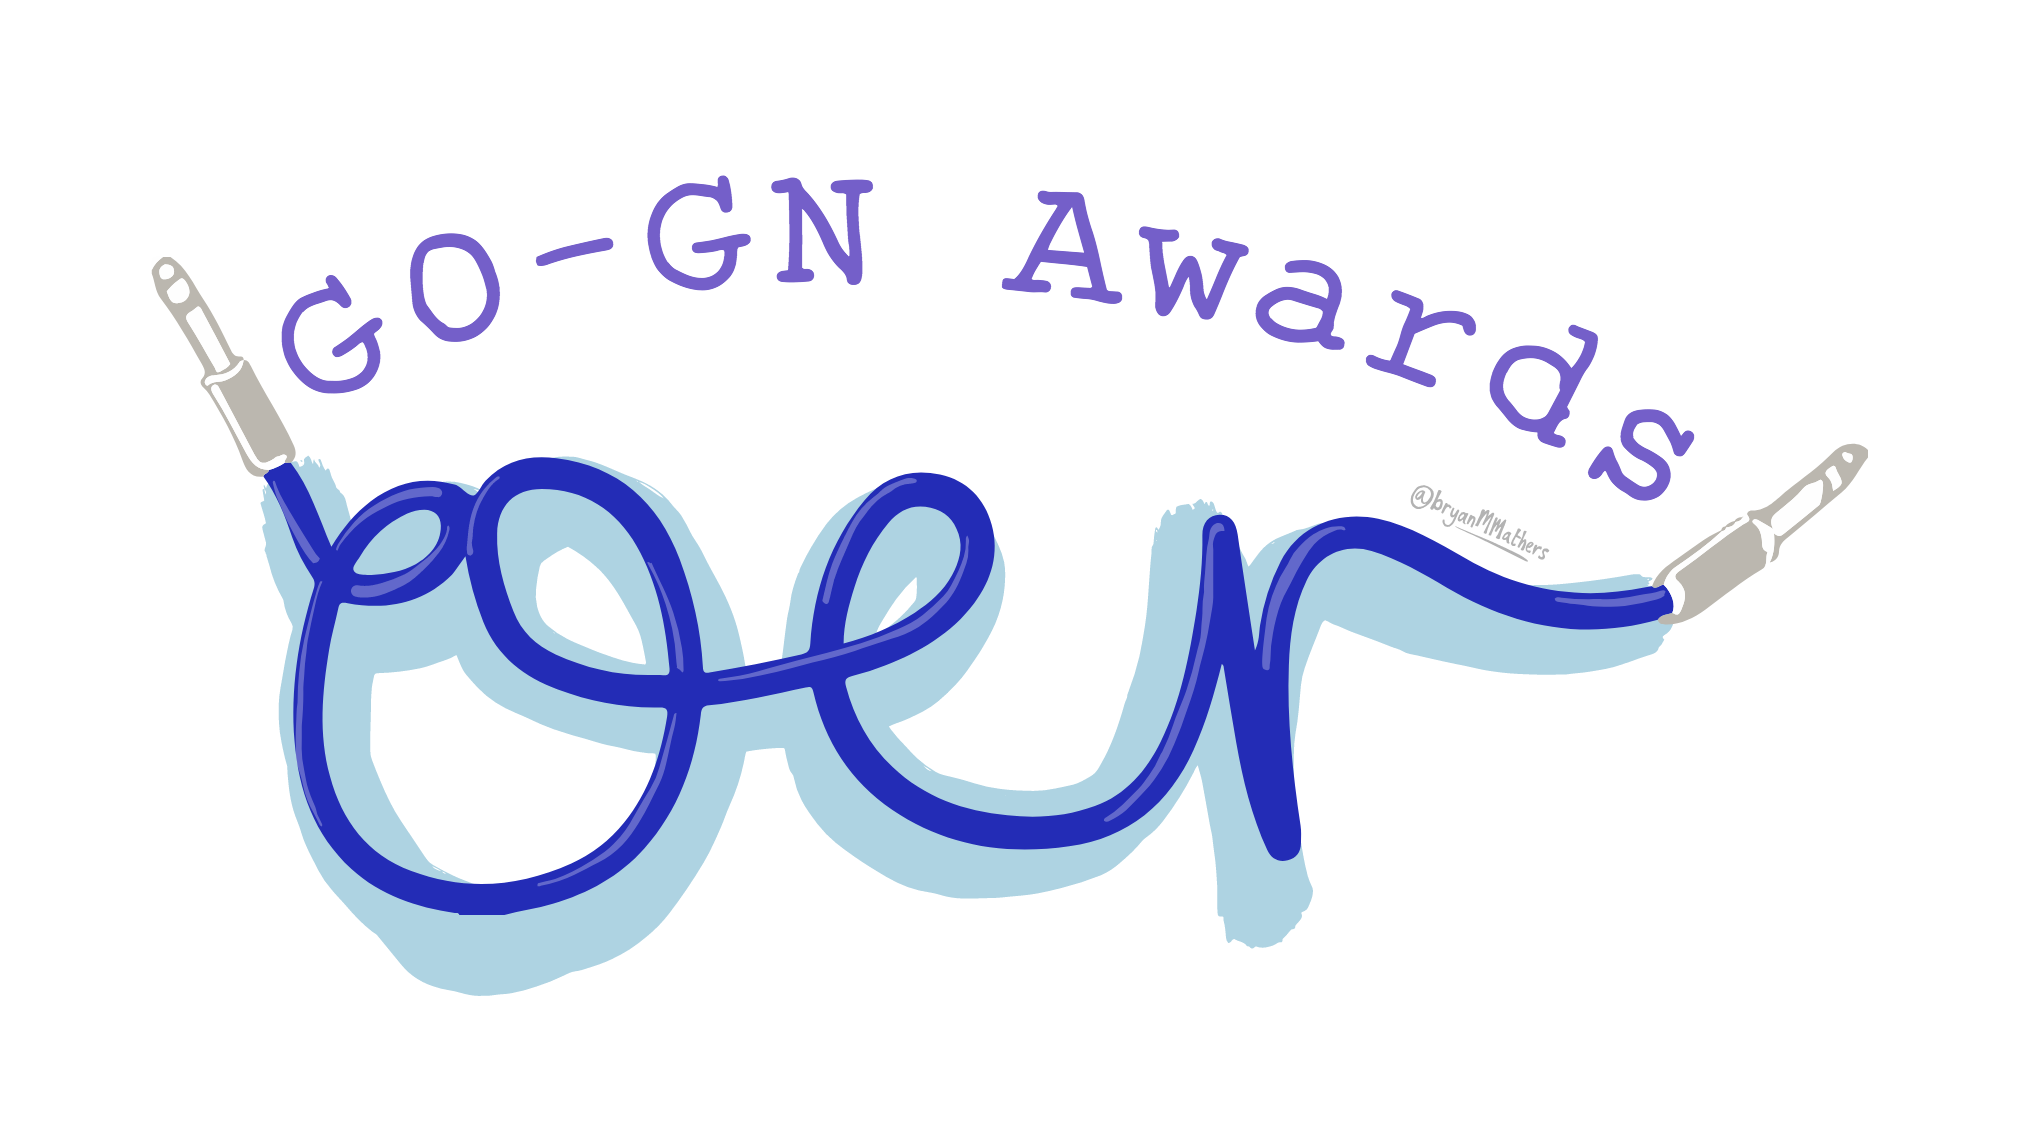 Winners 2019 Fred Mulder GO-GN Awards